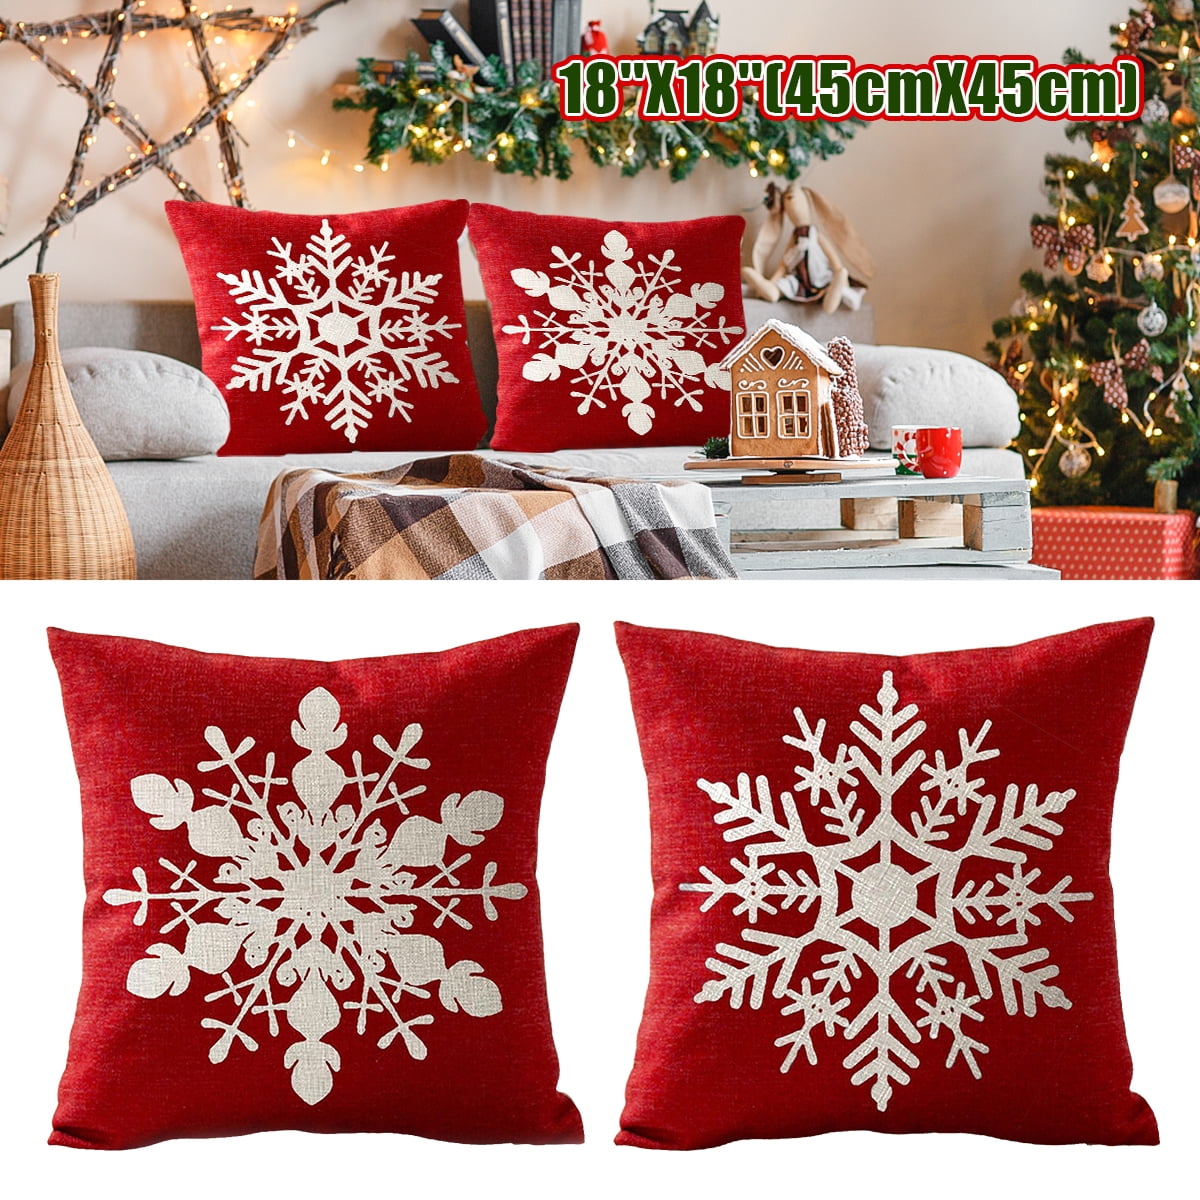 Winter Season Happy Holidays Festive Holiday Decor MERRY CHRISTMAS- Spun Polyester Square Pillow Xmas Tree